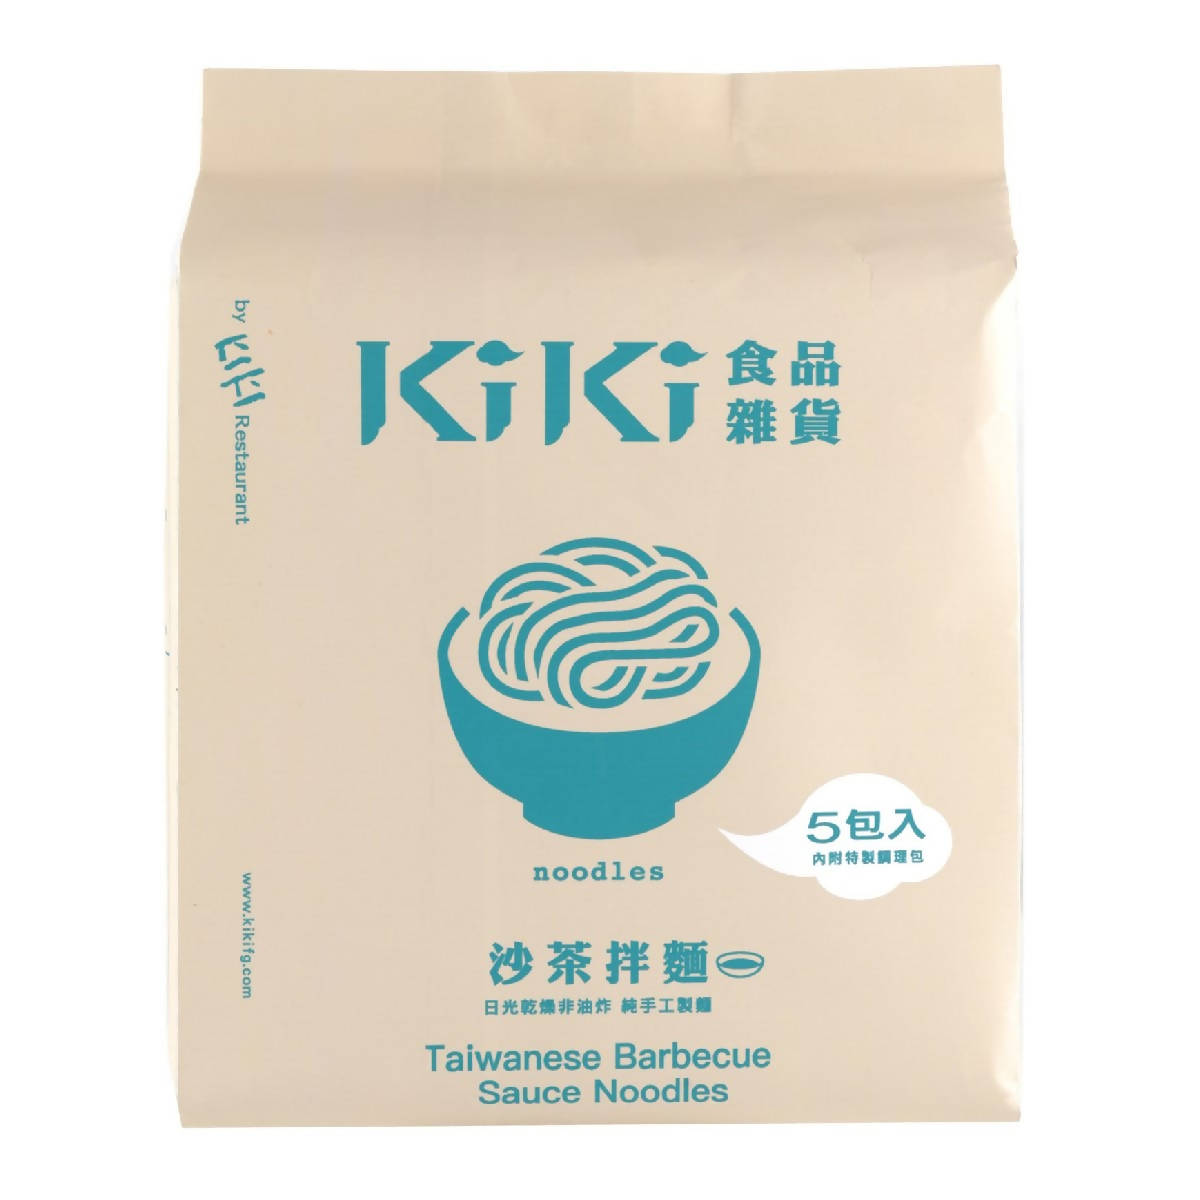 Taiwan Direct Mail【KIKI Groceries】KIKI FINE GOODS Sand Tea Noodles 450g 5pcs 